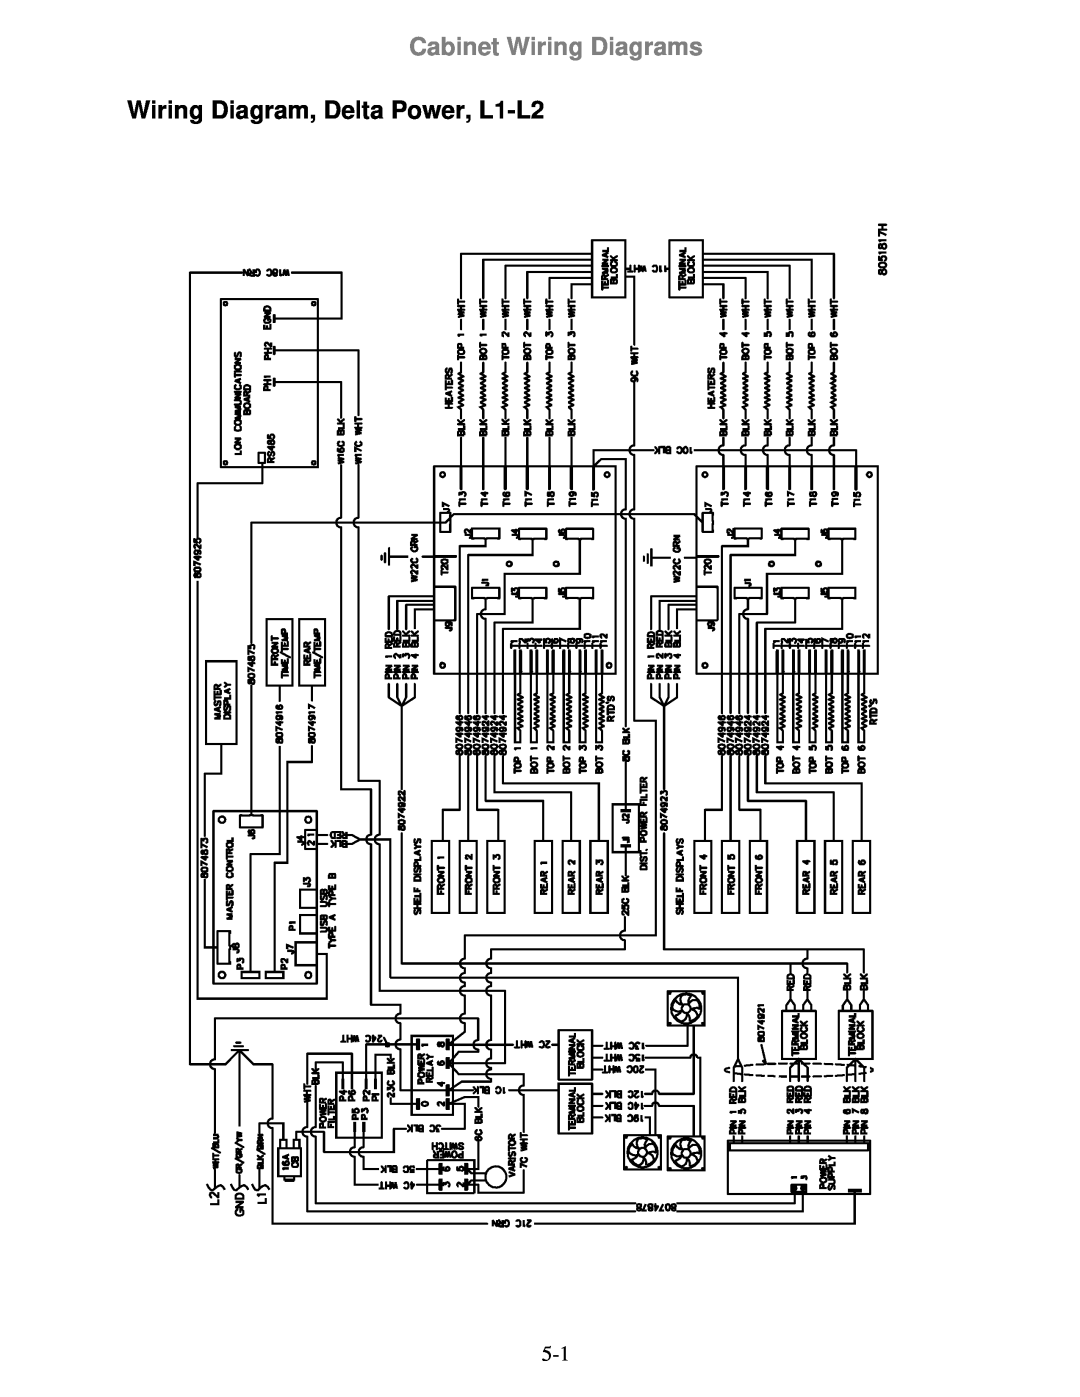 Frymaster 8196606 manual Cabinet Wiring Diagrams, Wiring Diagram, Delta Power, L1-L2 